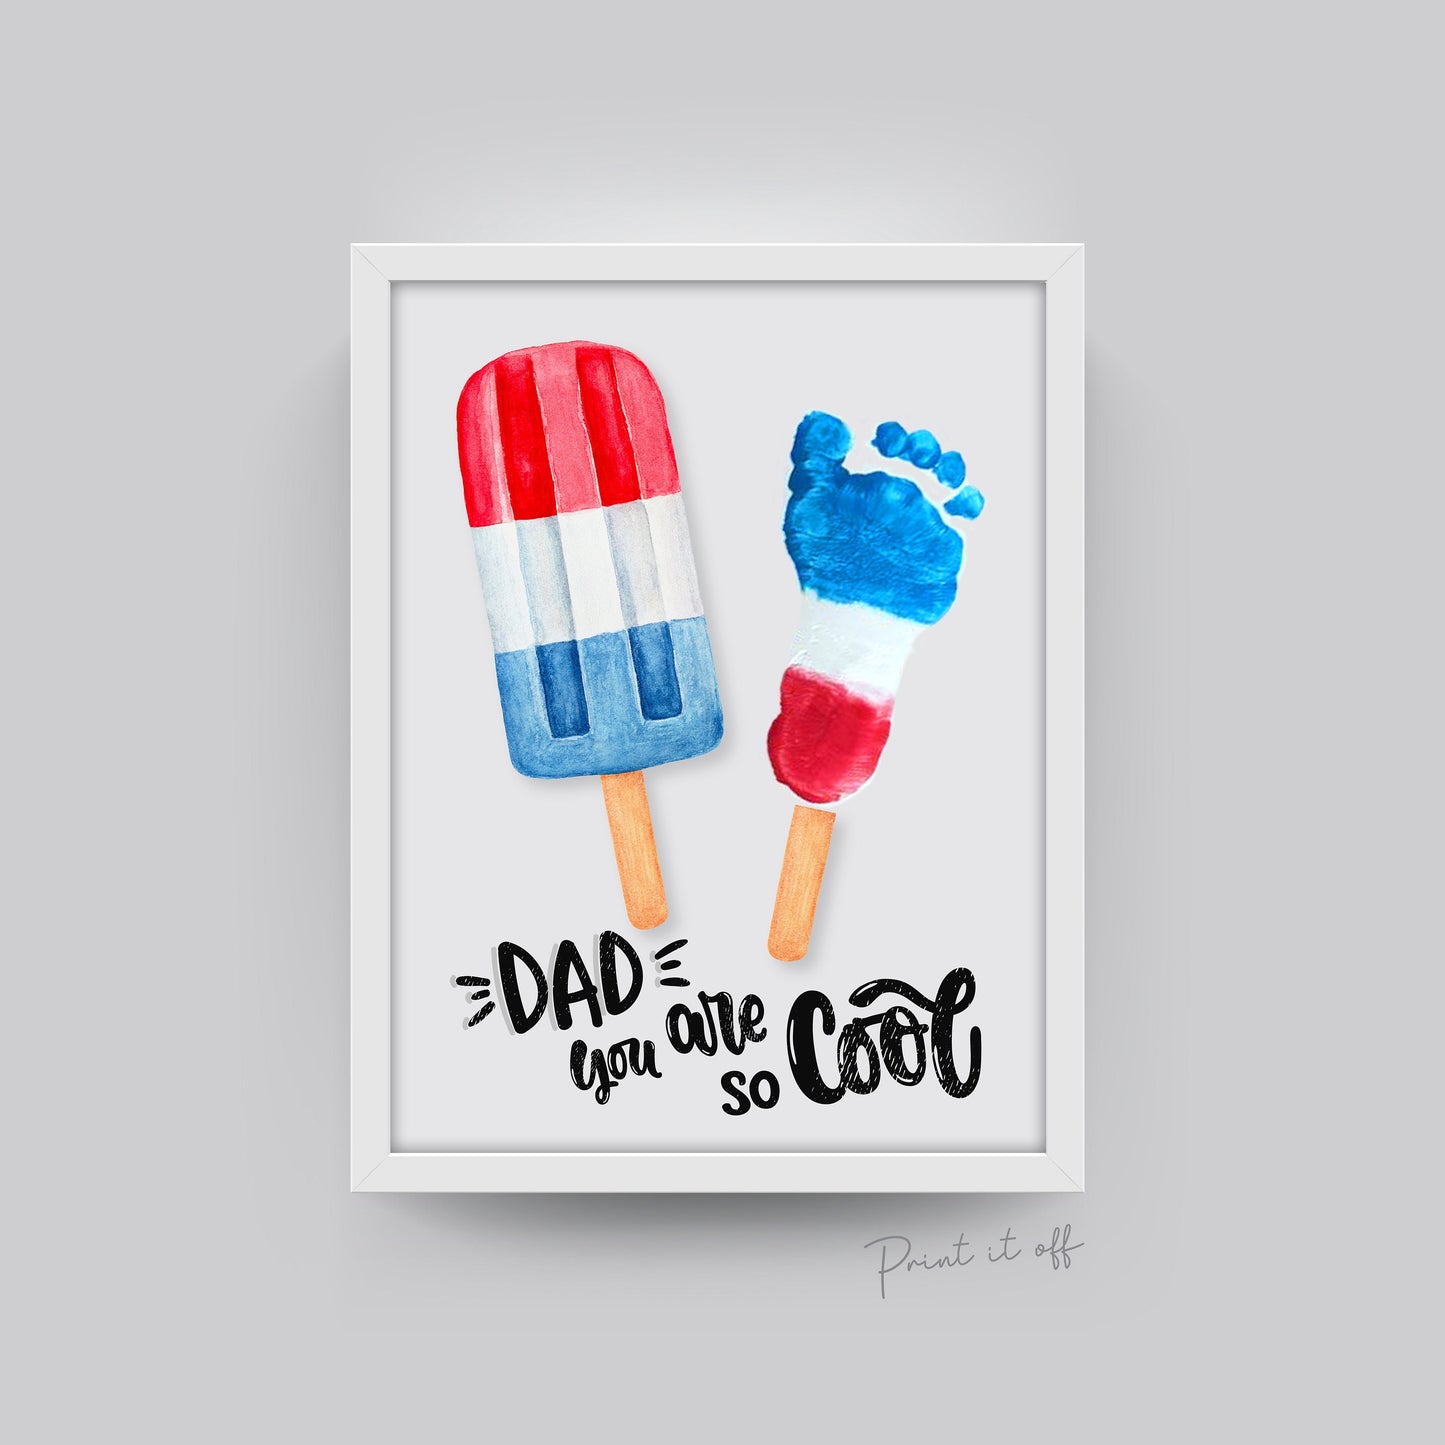 Cool Dad Daddy / Footprint Handprint Art Craft Ice Cream Block / Father's Day / Kids Baby Toddler Keepsake DIY Card / Print it off 0512